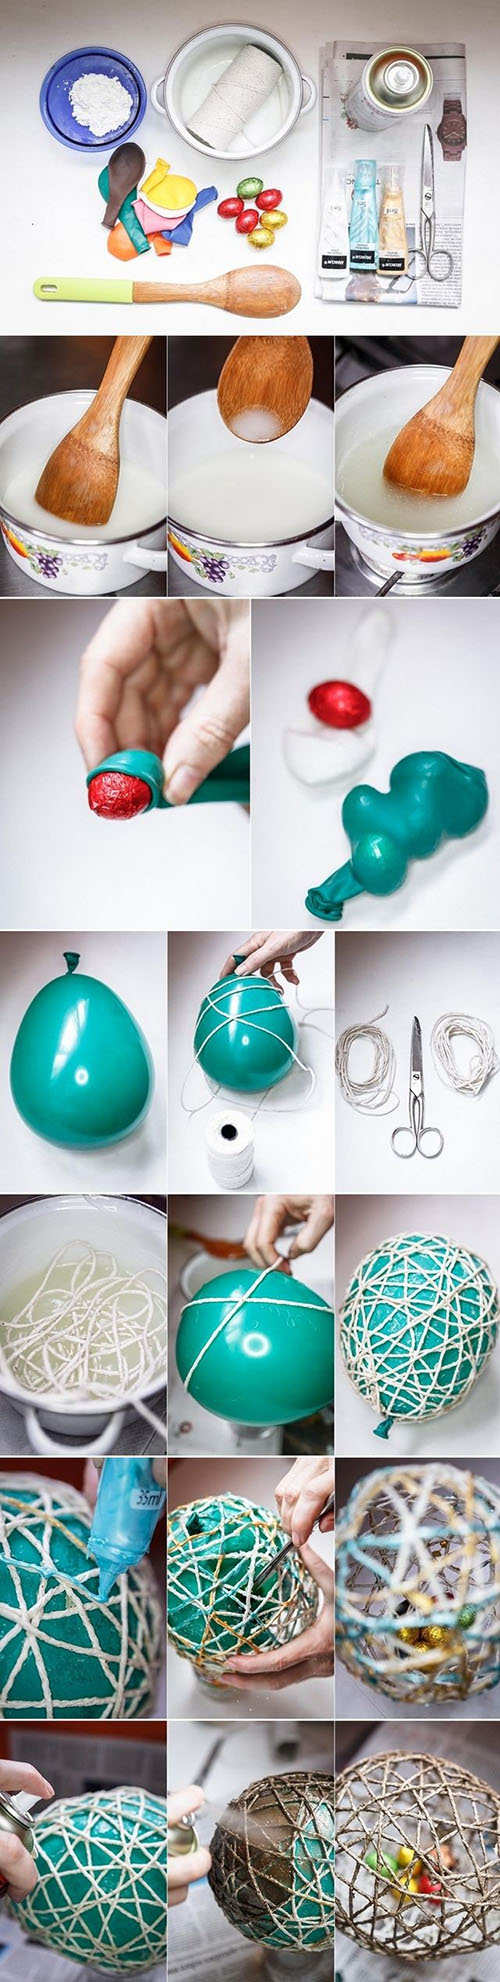 7 Homemade Easter gift ideas a2049d9